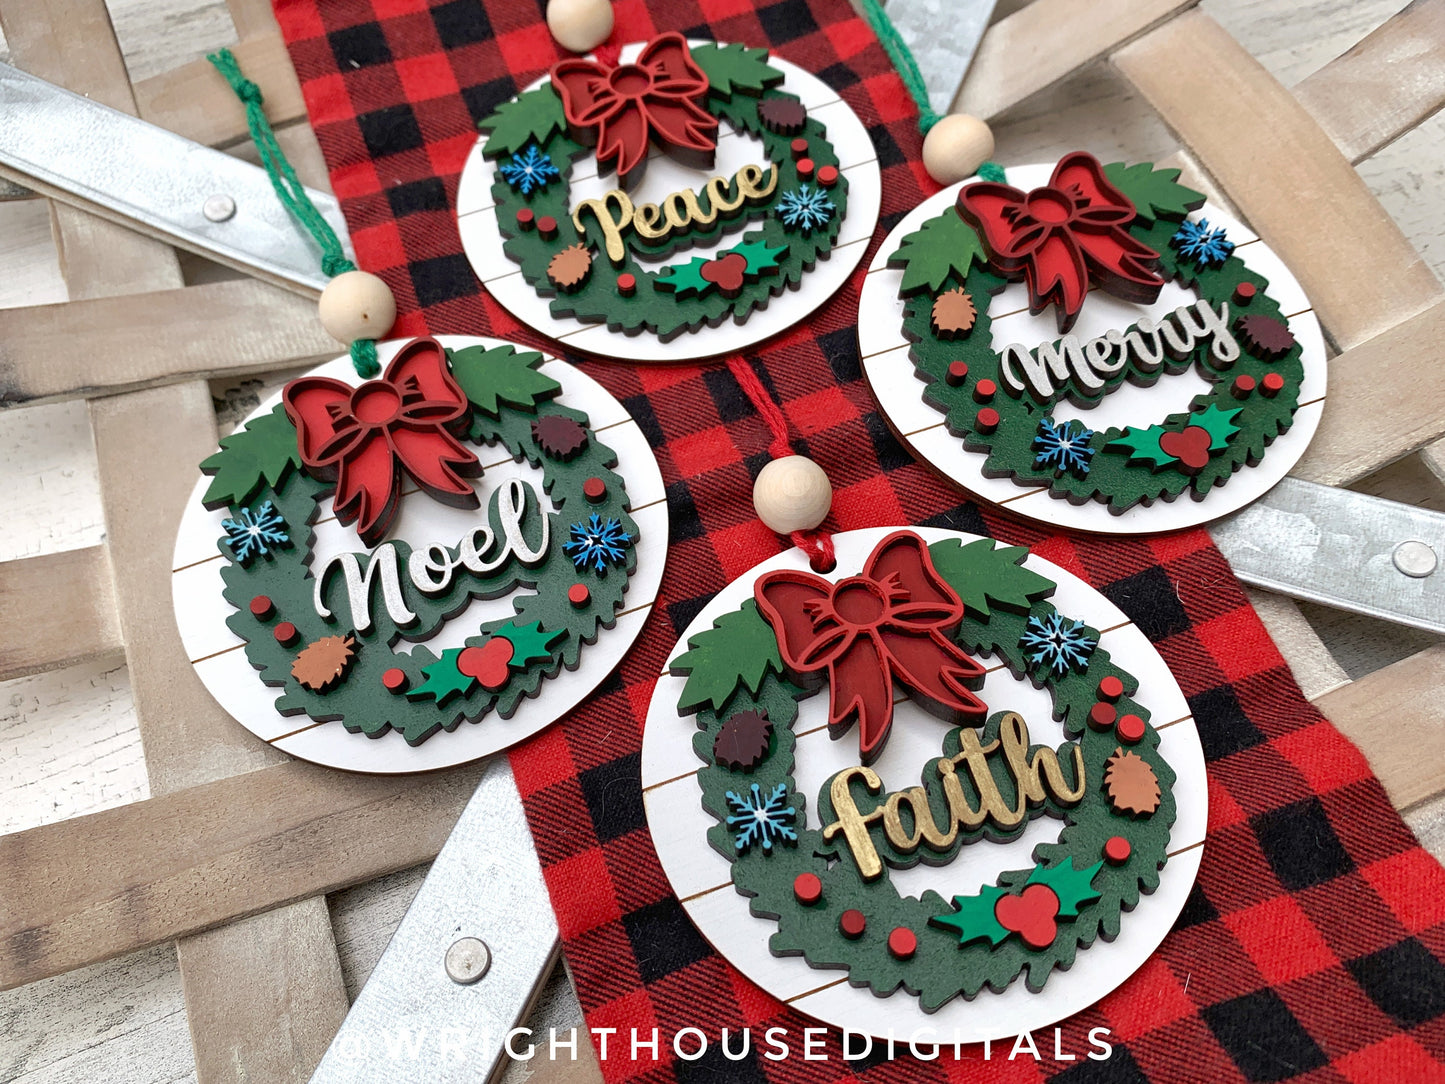 Layered Christmas Word Wreath Ornament Set - Faith Merry Peace Noel - Handdrawn Cut File For Glowforge Lasers - Digital SVG File